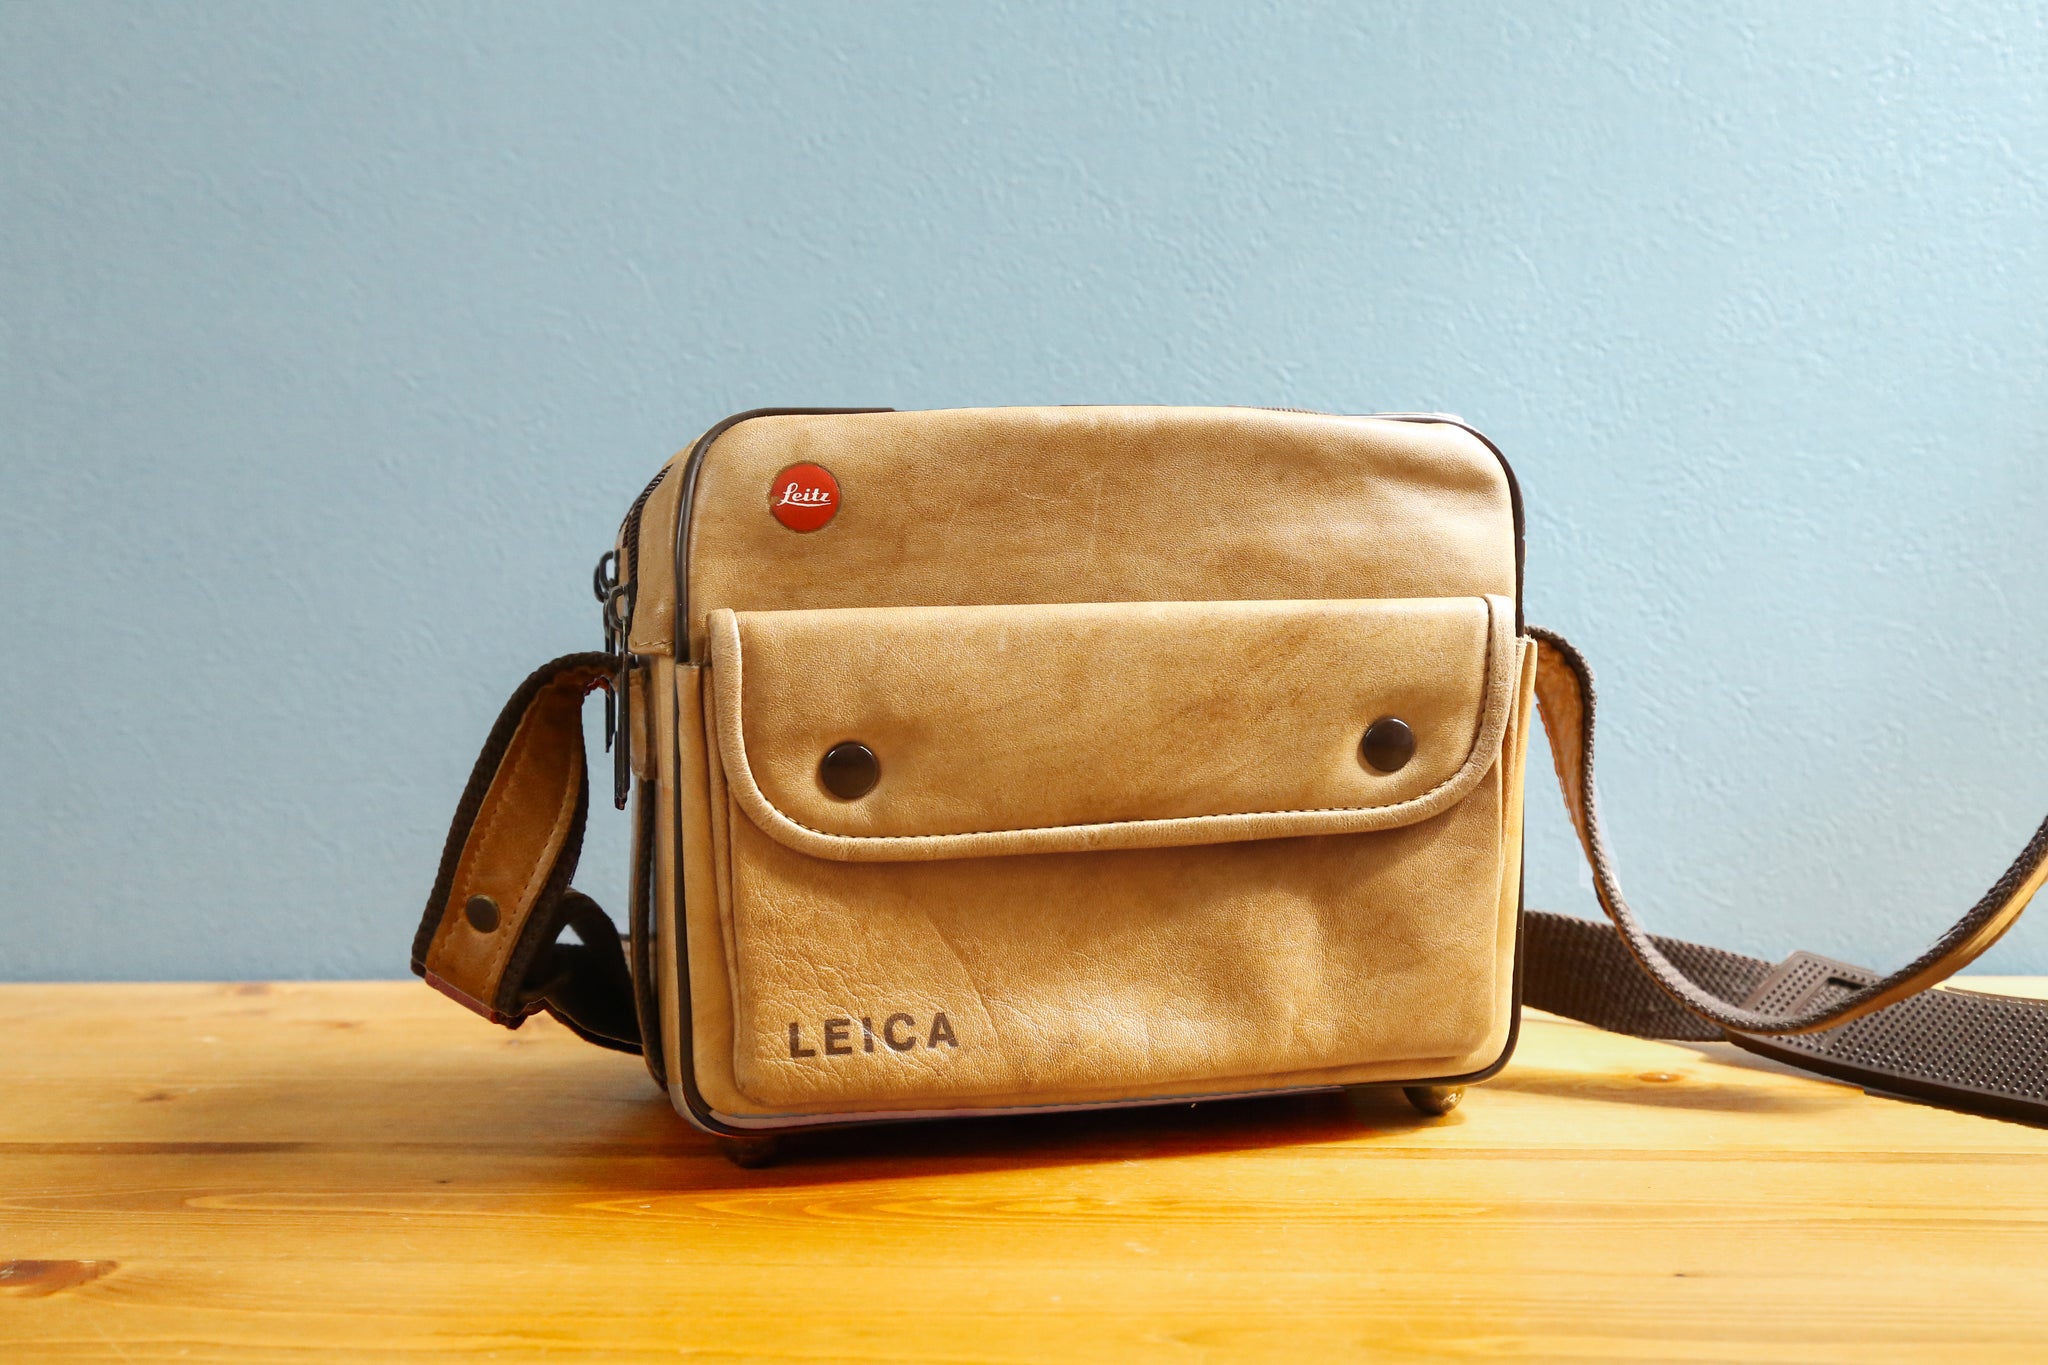 Leica(ライカ)純正 ドイツ製本革カメラバッグ - カメラ